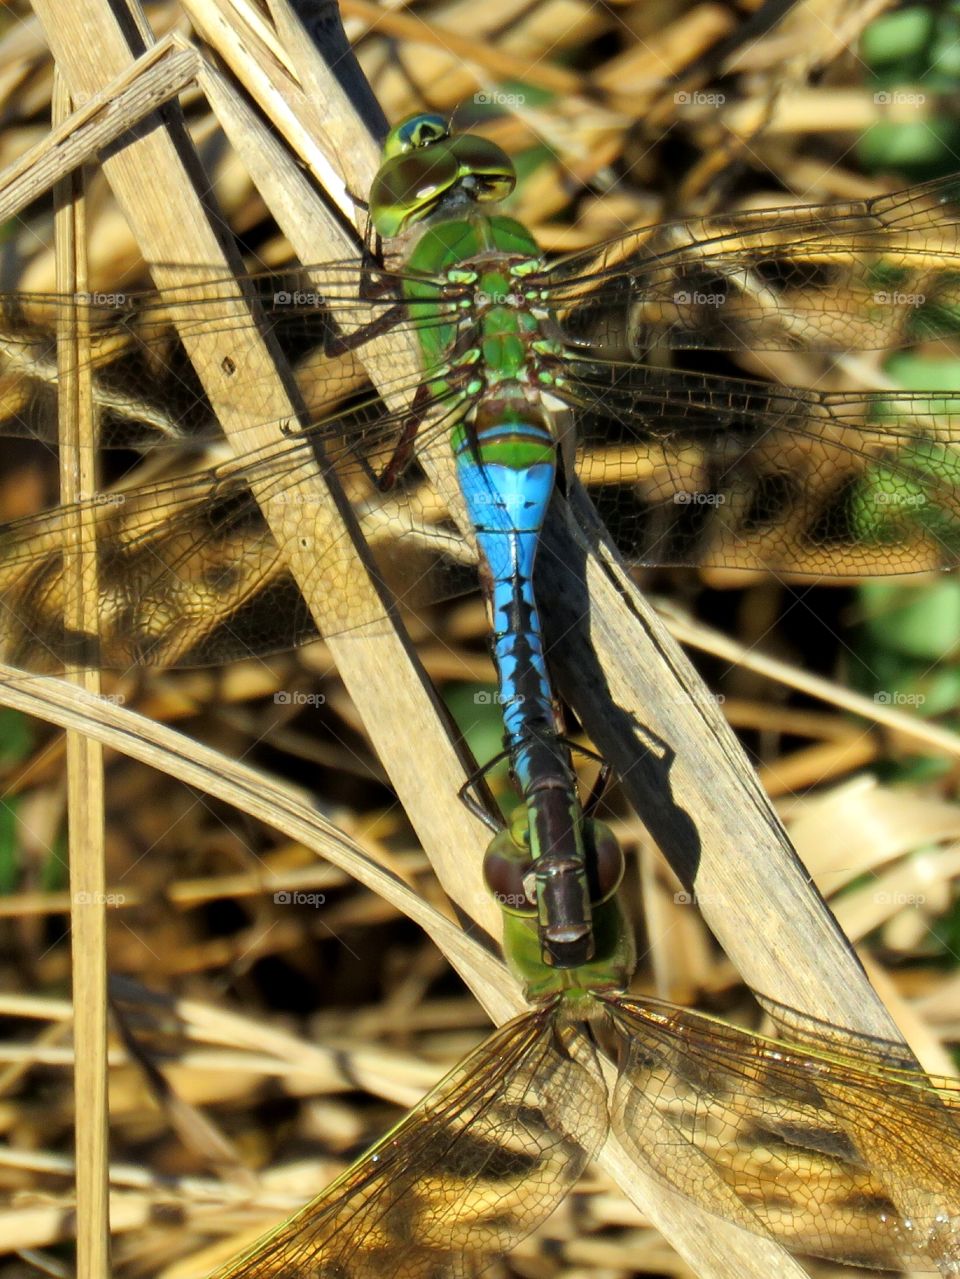 mating darner dragonflies